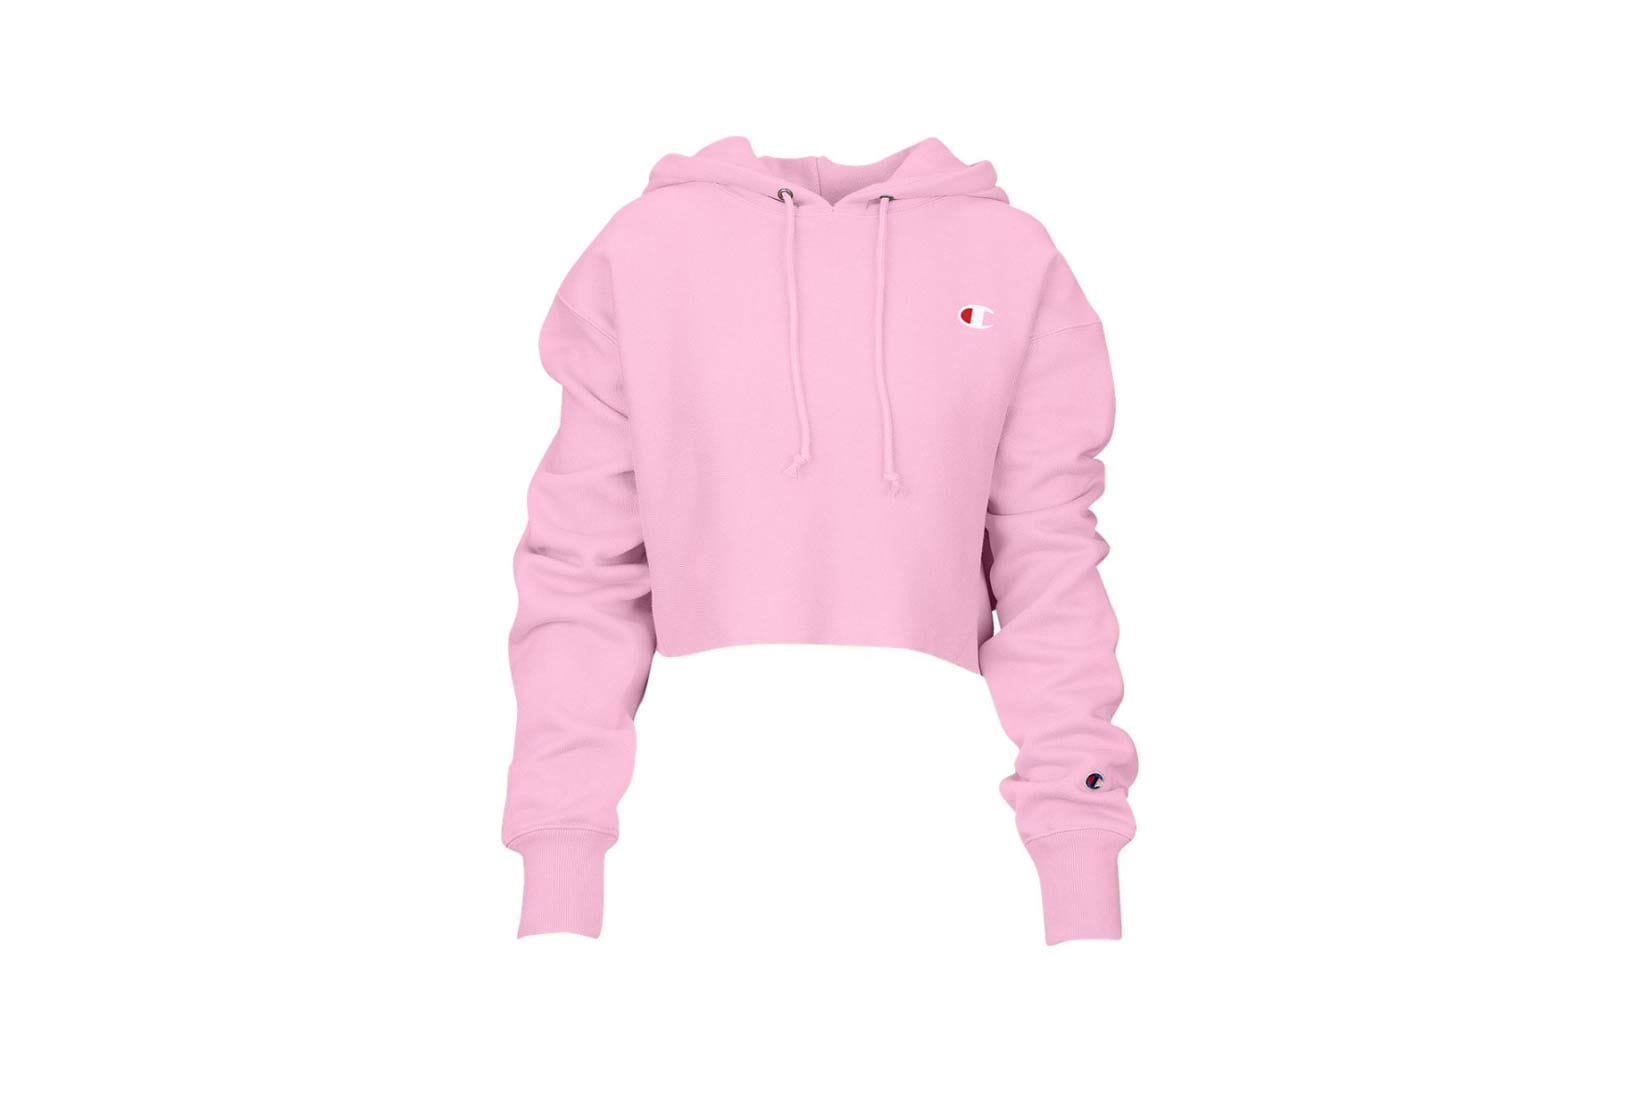 pink cropped champion sweatshirt